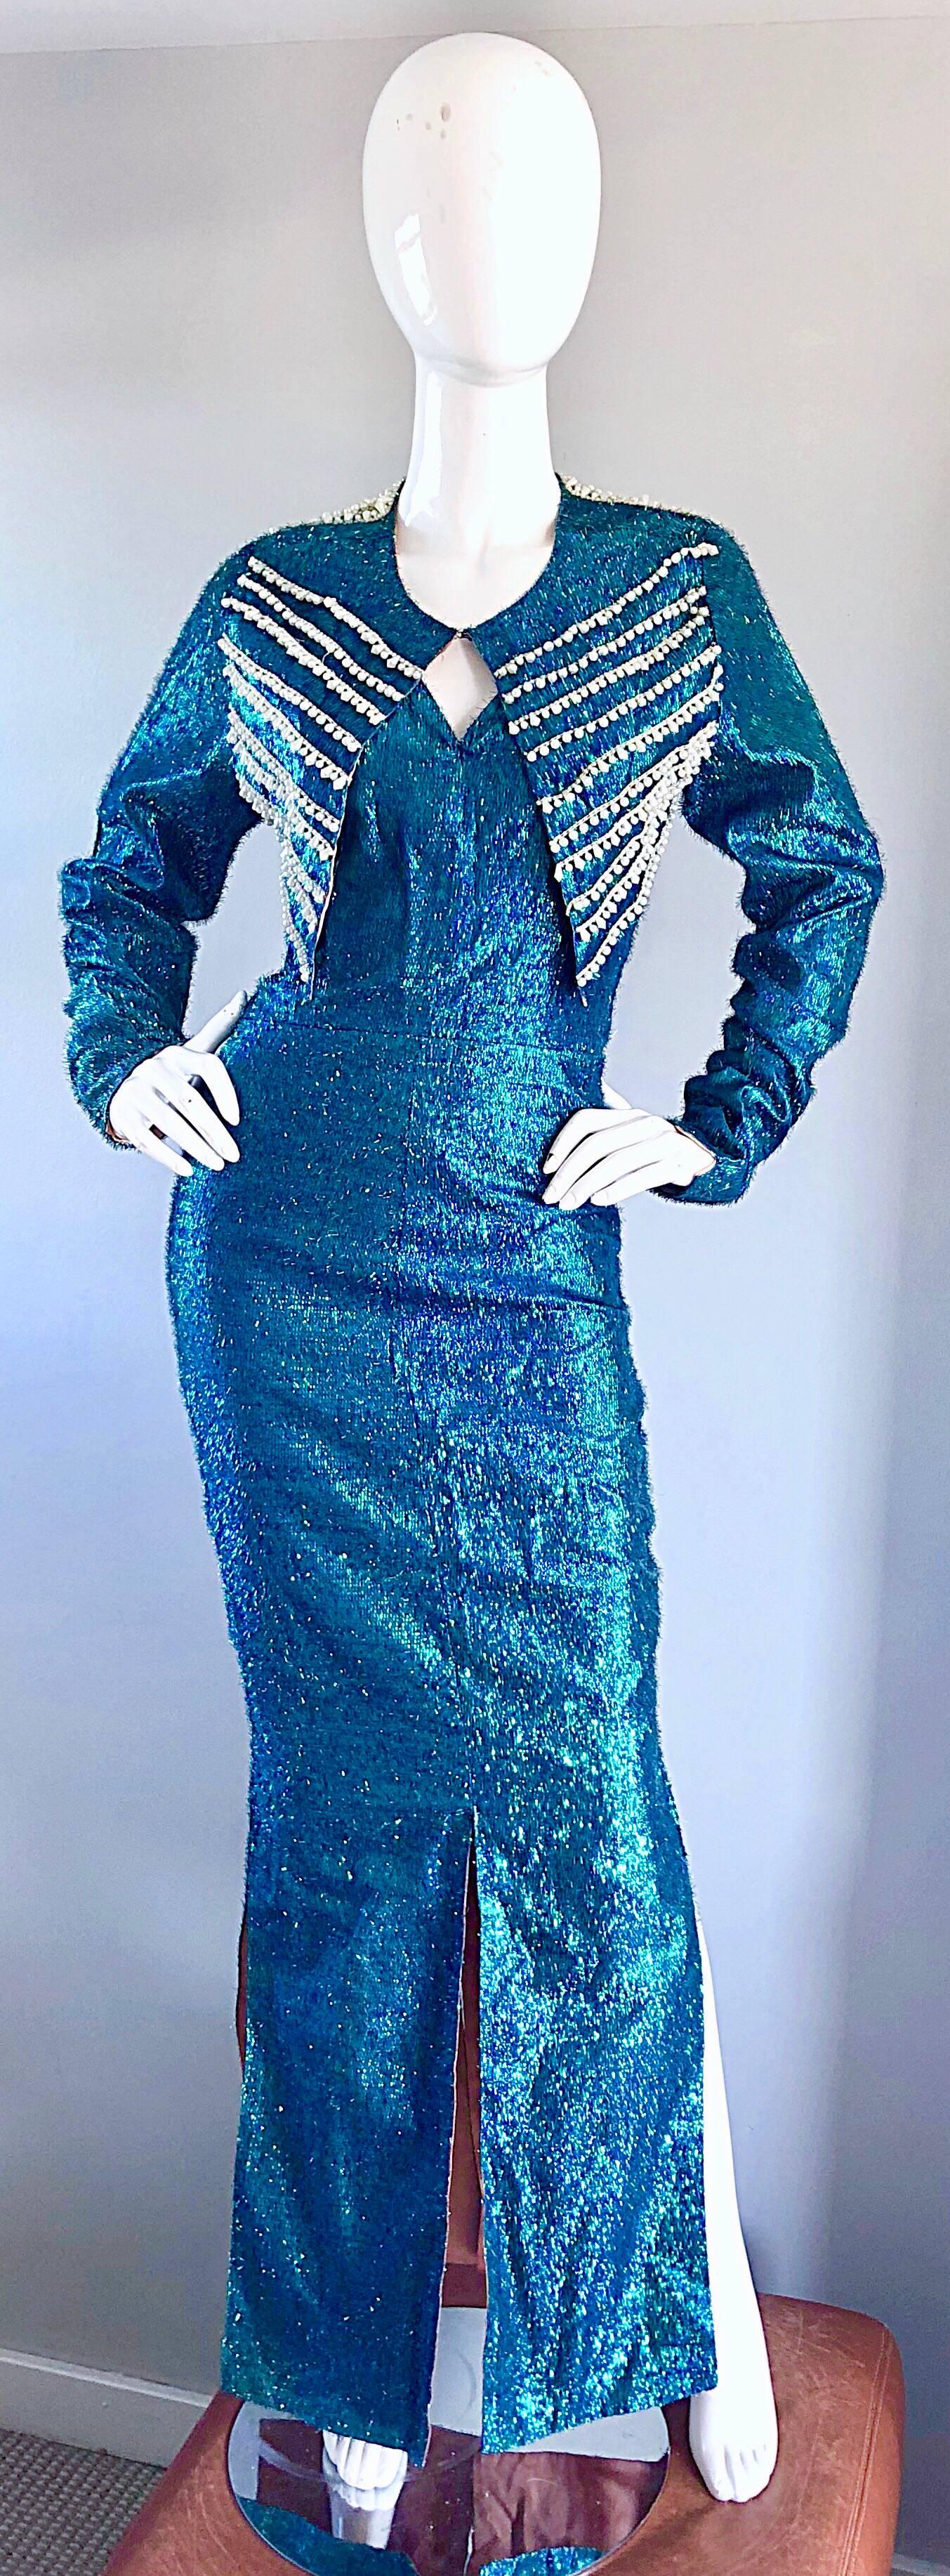 cerulean blue beaded worth dress